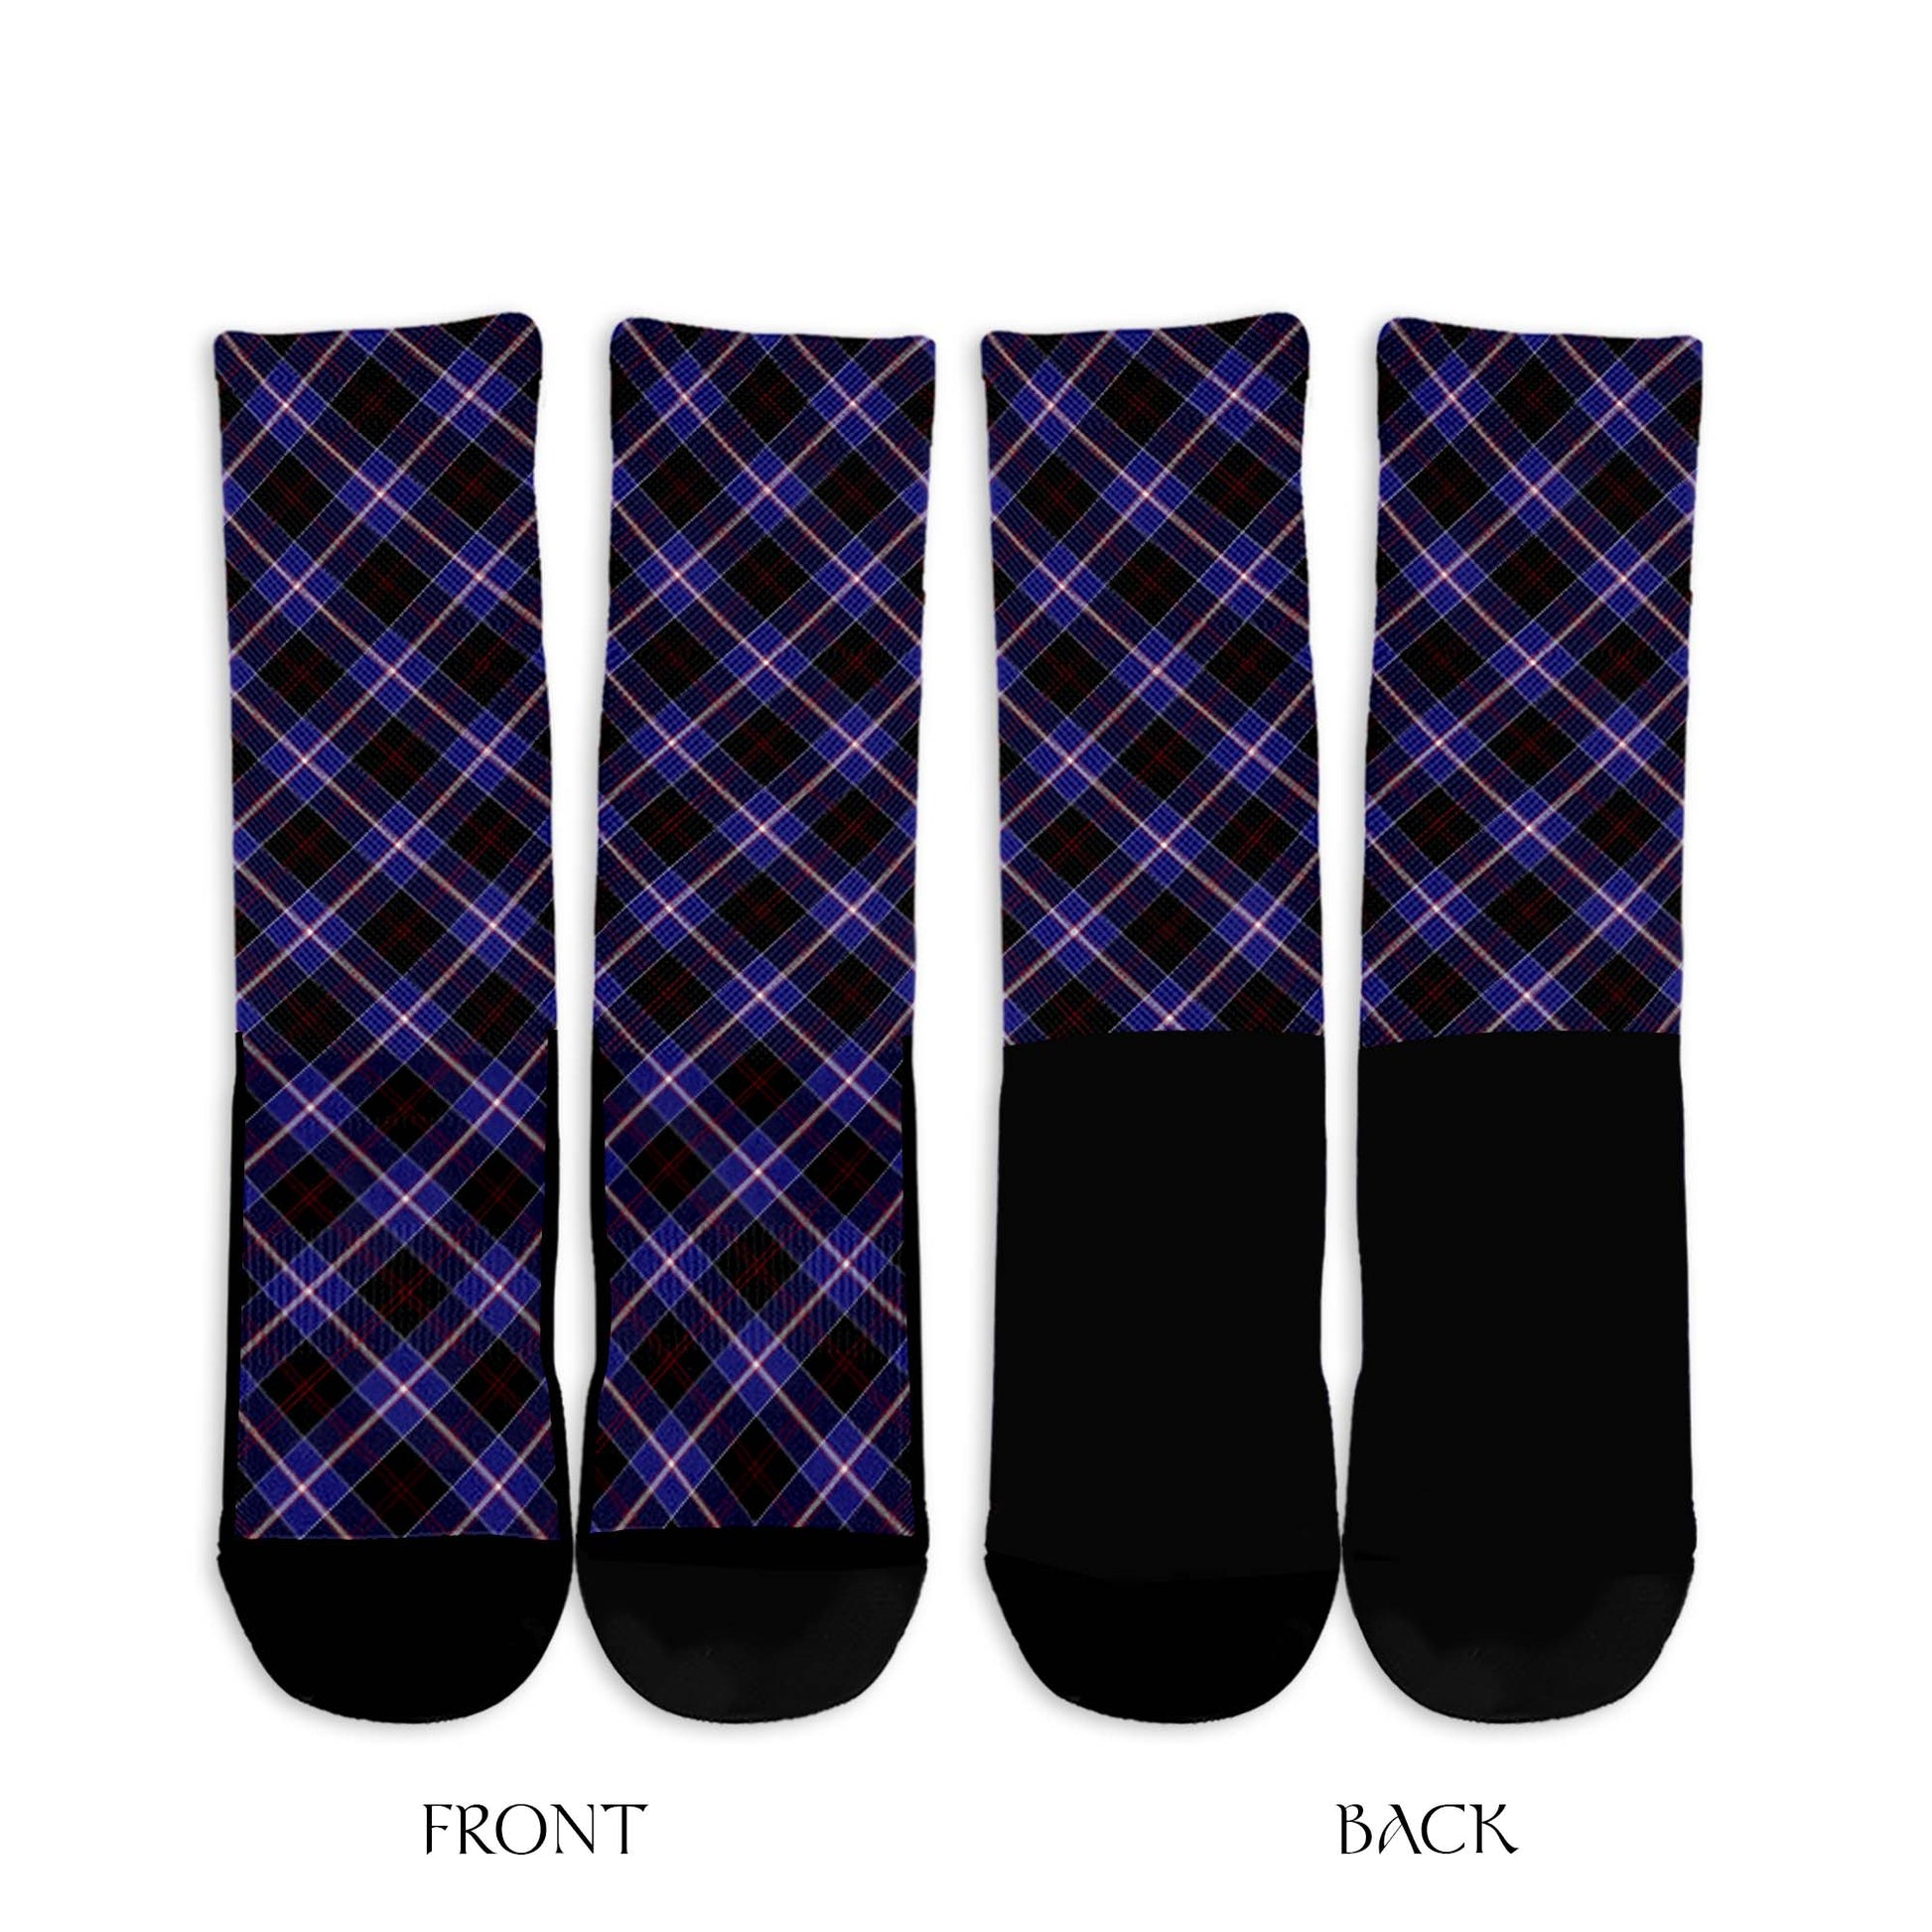 Dunlop Modern Tartan Crew Socks Cross Tartan Style - Tartanvibesclothing